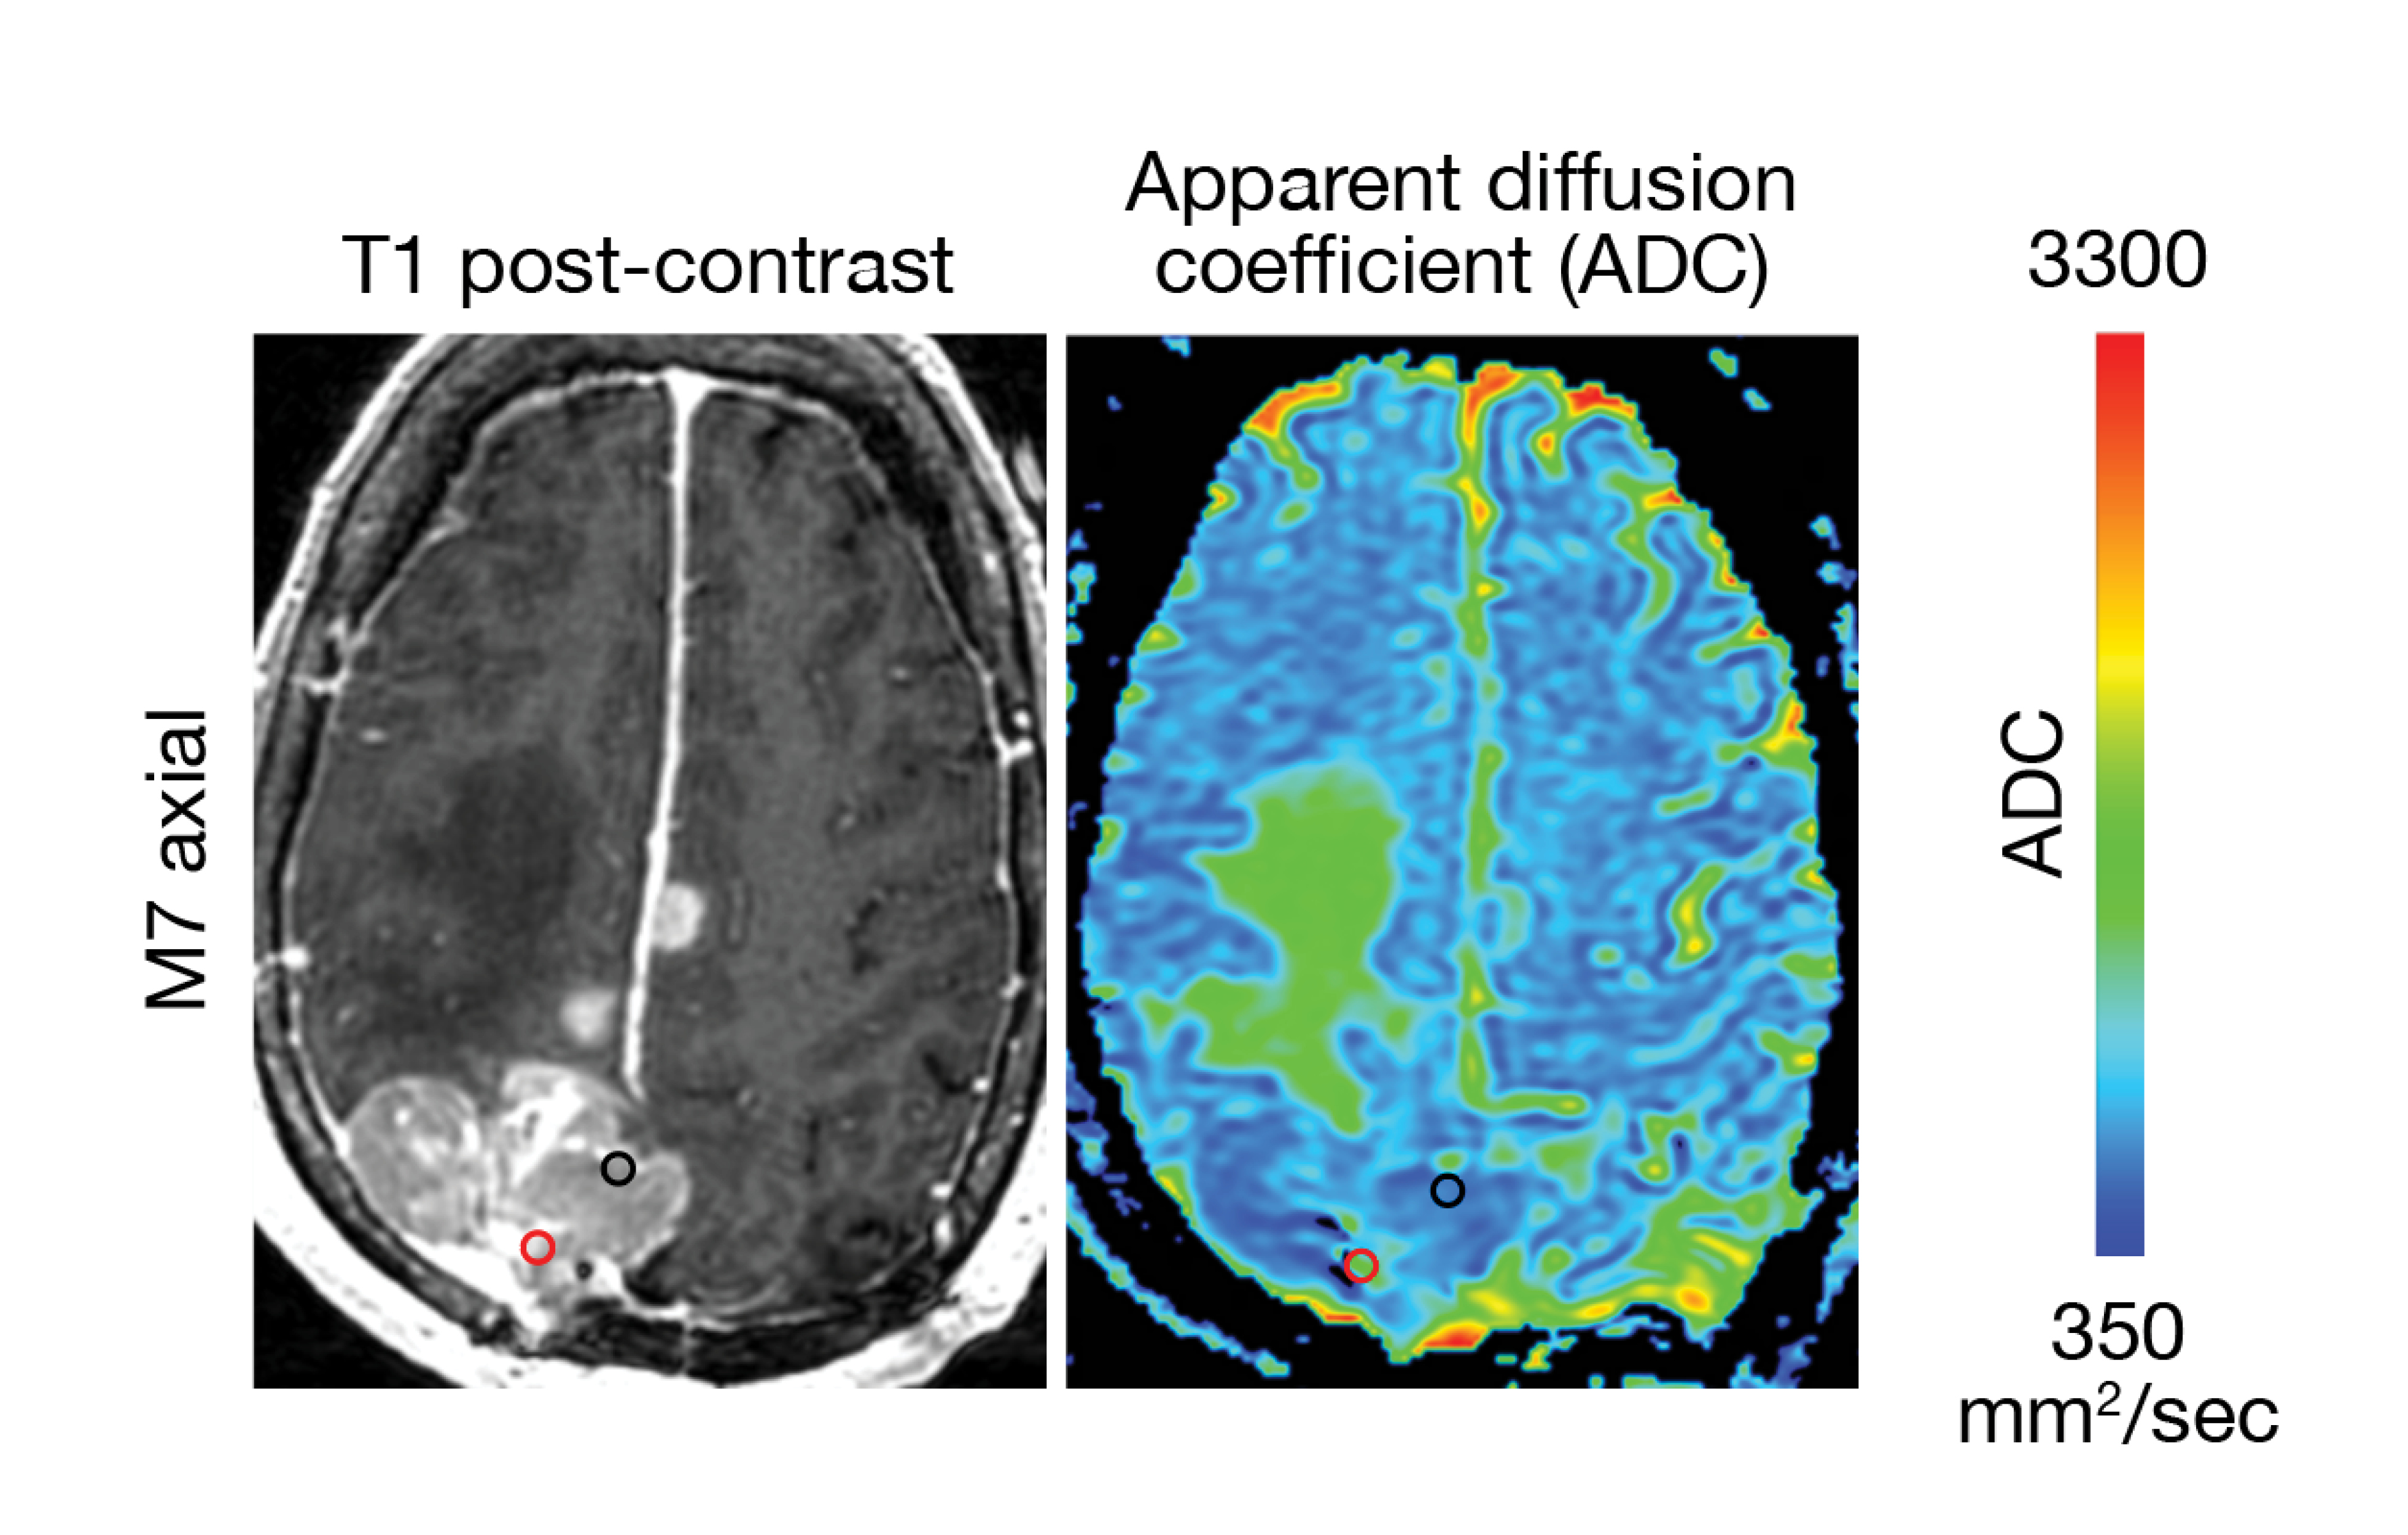 MRI and corresponding ADC levels in a meningioma